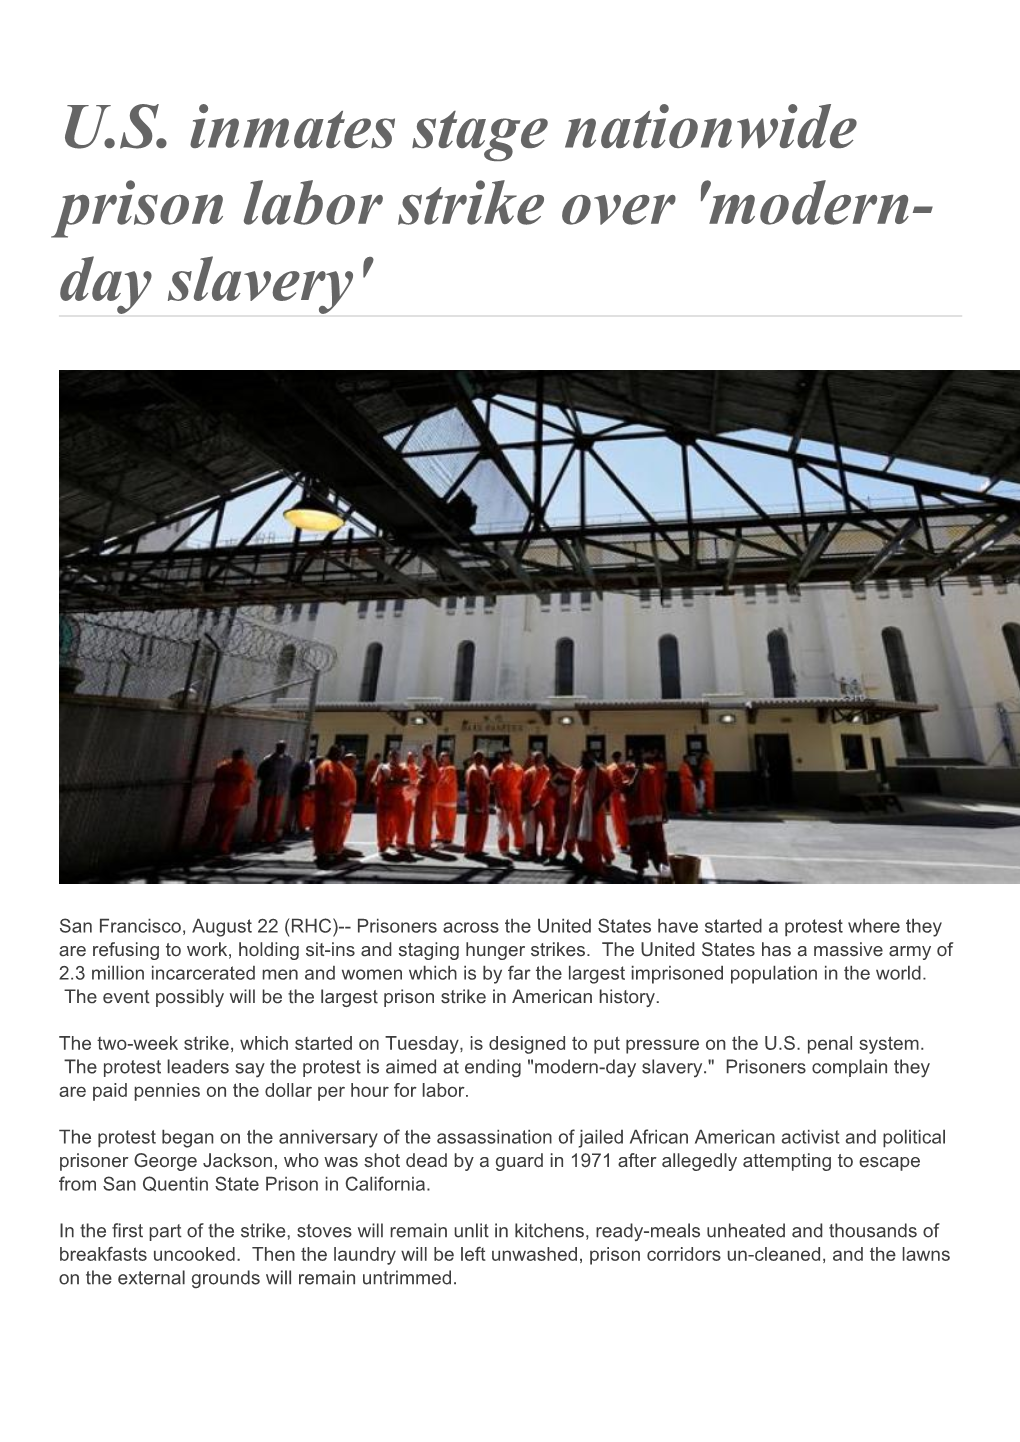 U.S. Inmates Stage Nationwide Prison Labor Strike Over 'Modern- Day Slavery'